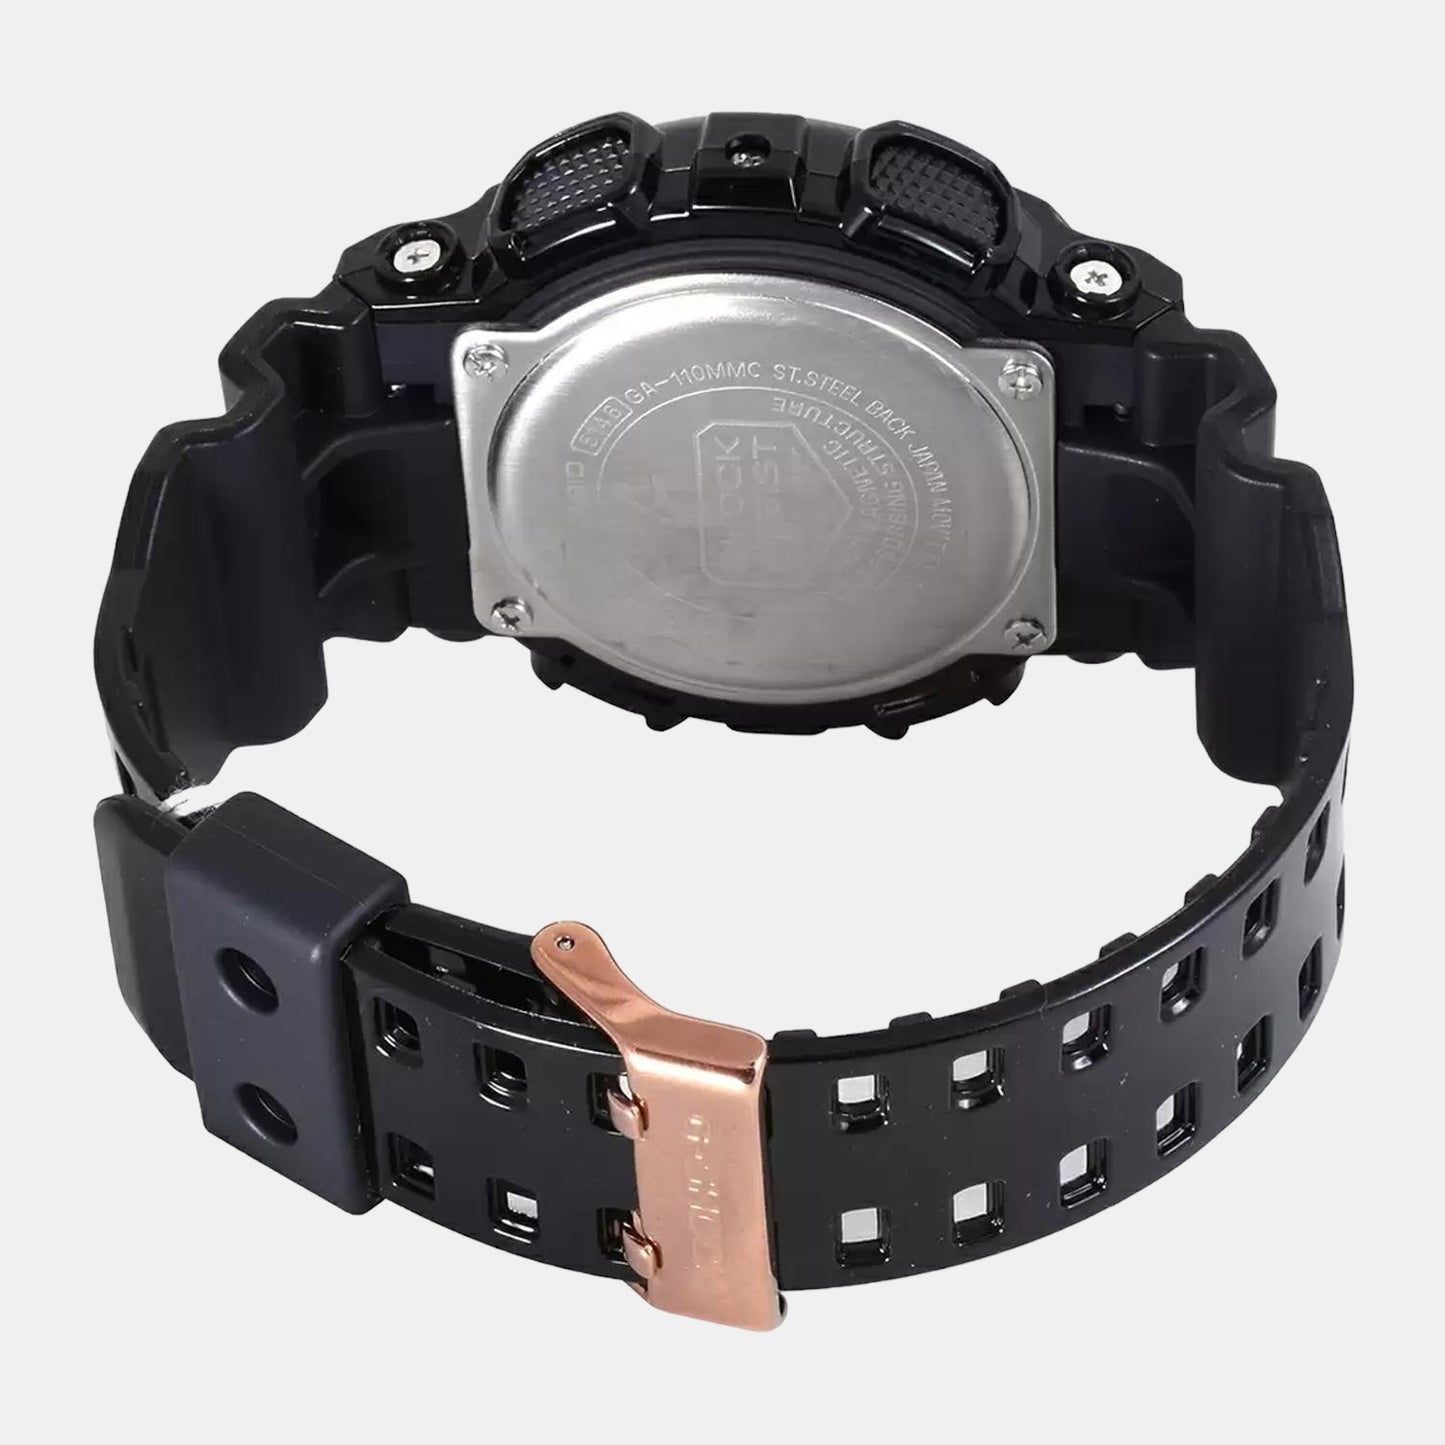 casio-stainless-steel-black-silver-analog-digital-mens-watch-g937